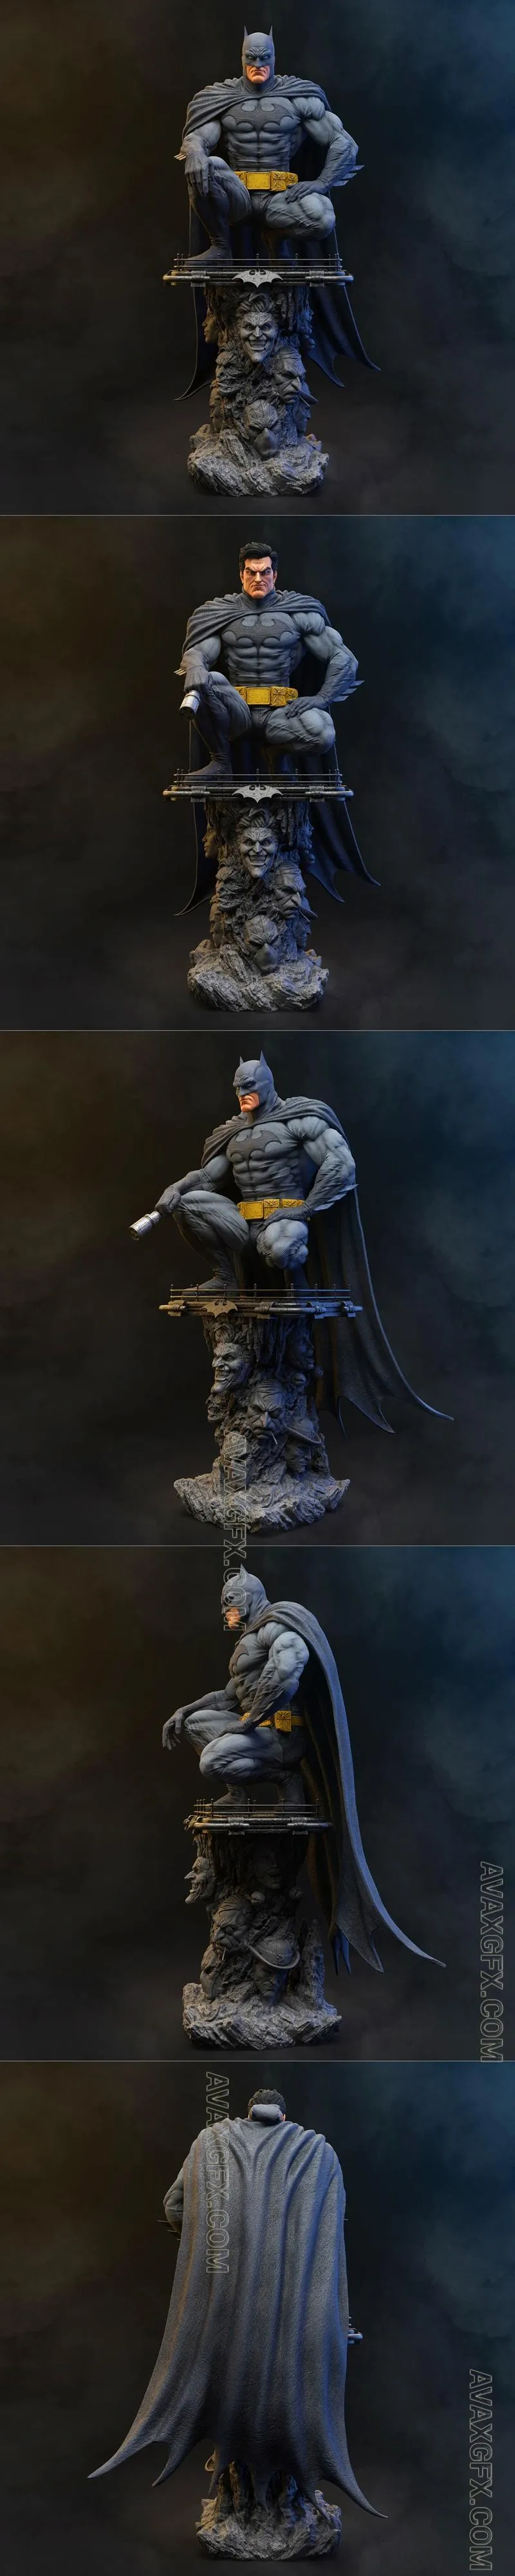 Batman By Akshay Jain - STL 3D Model